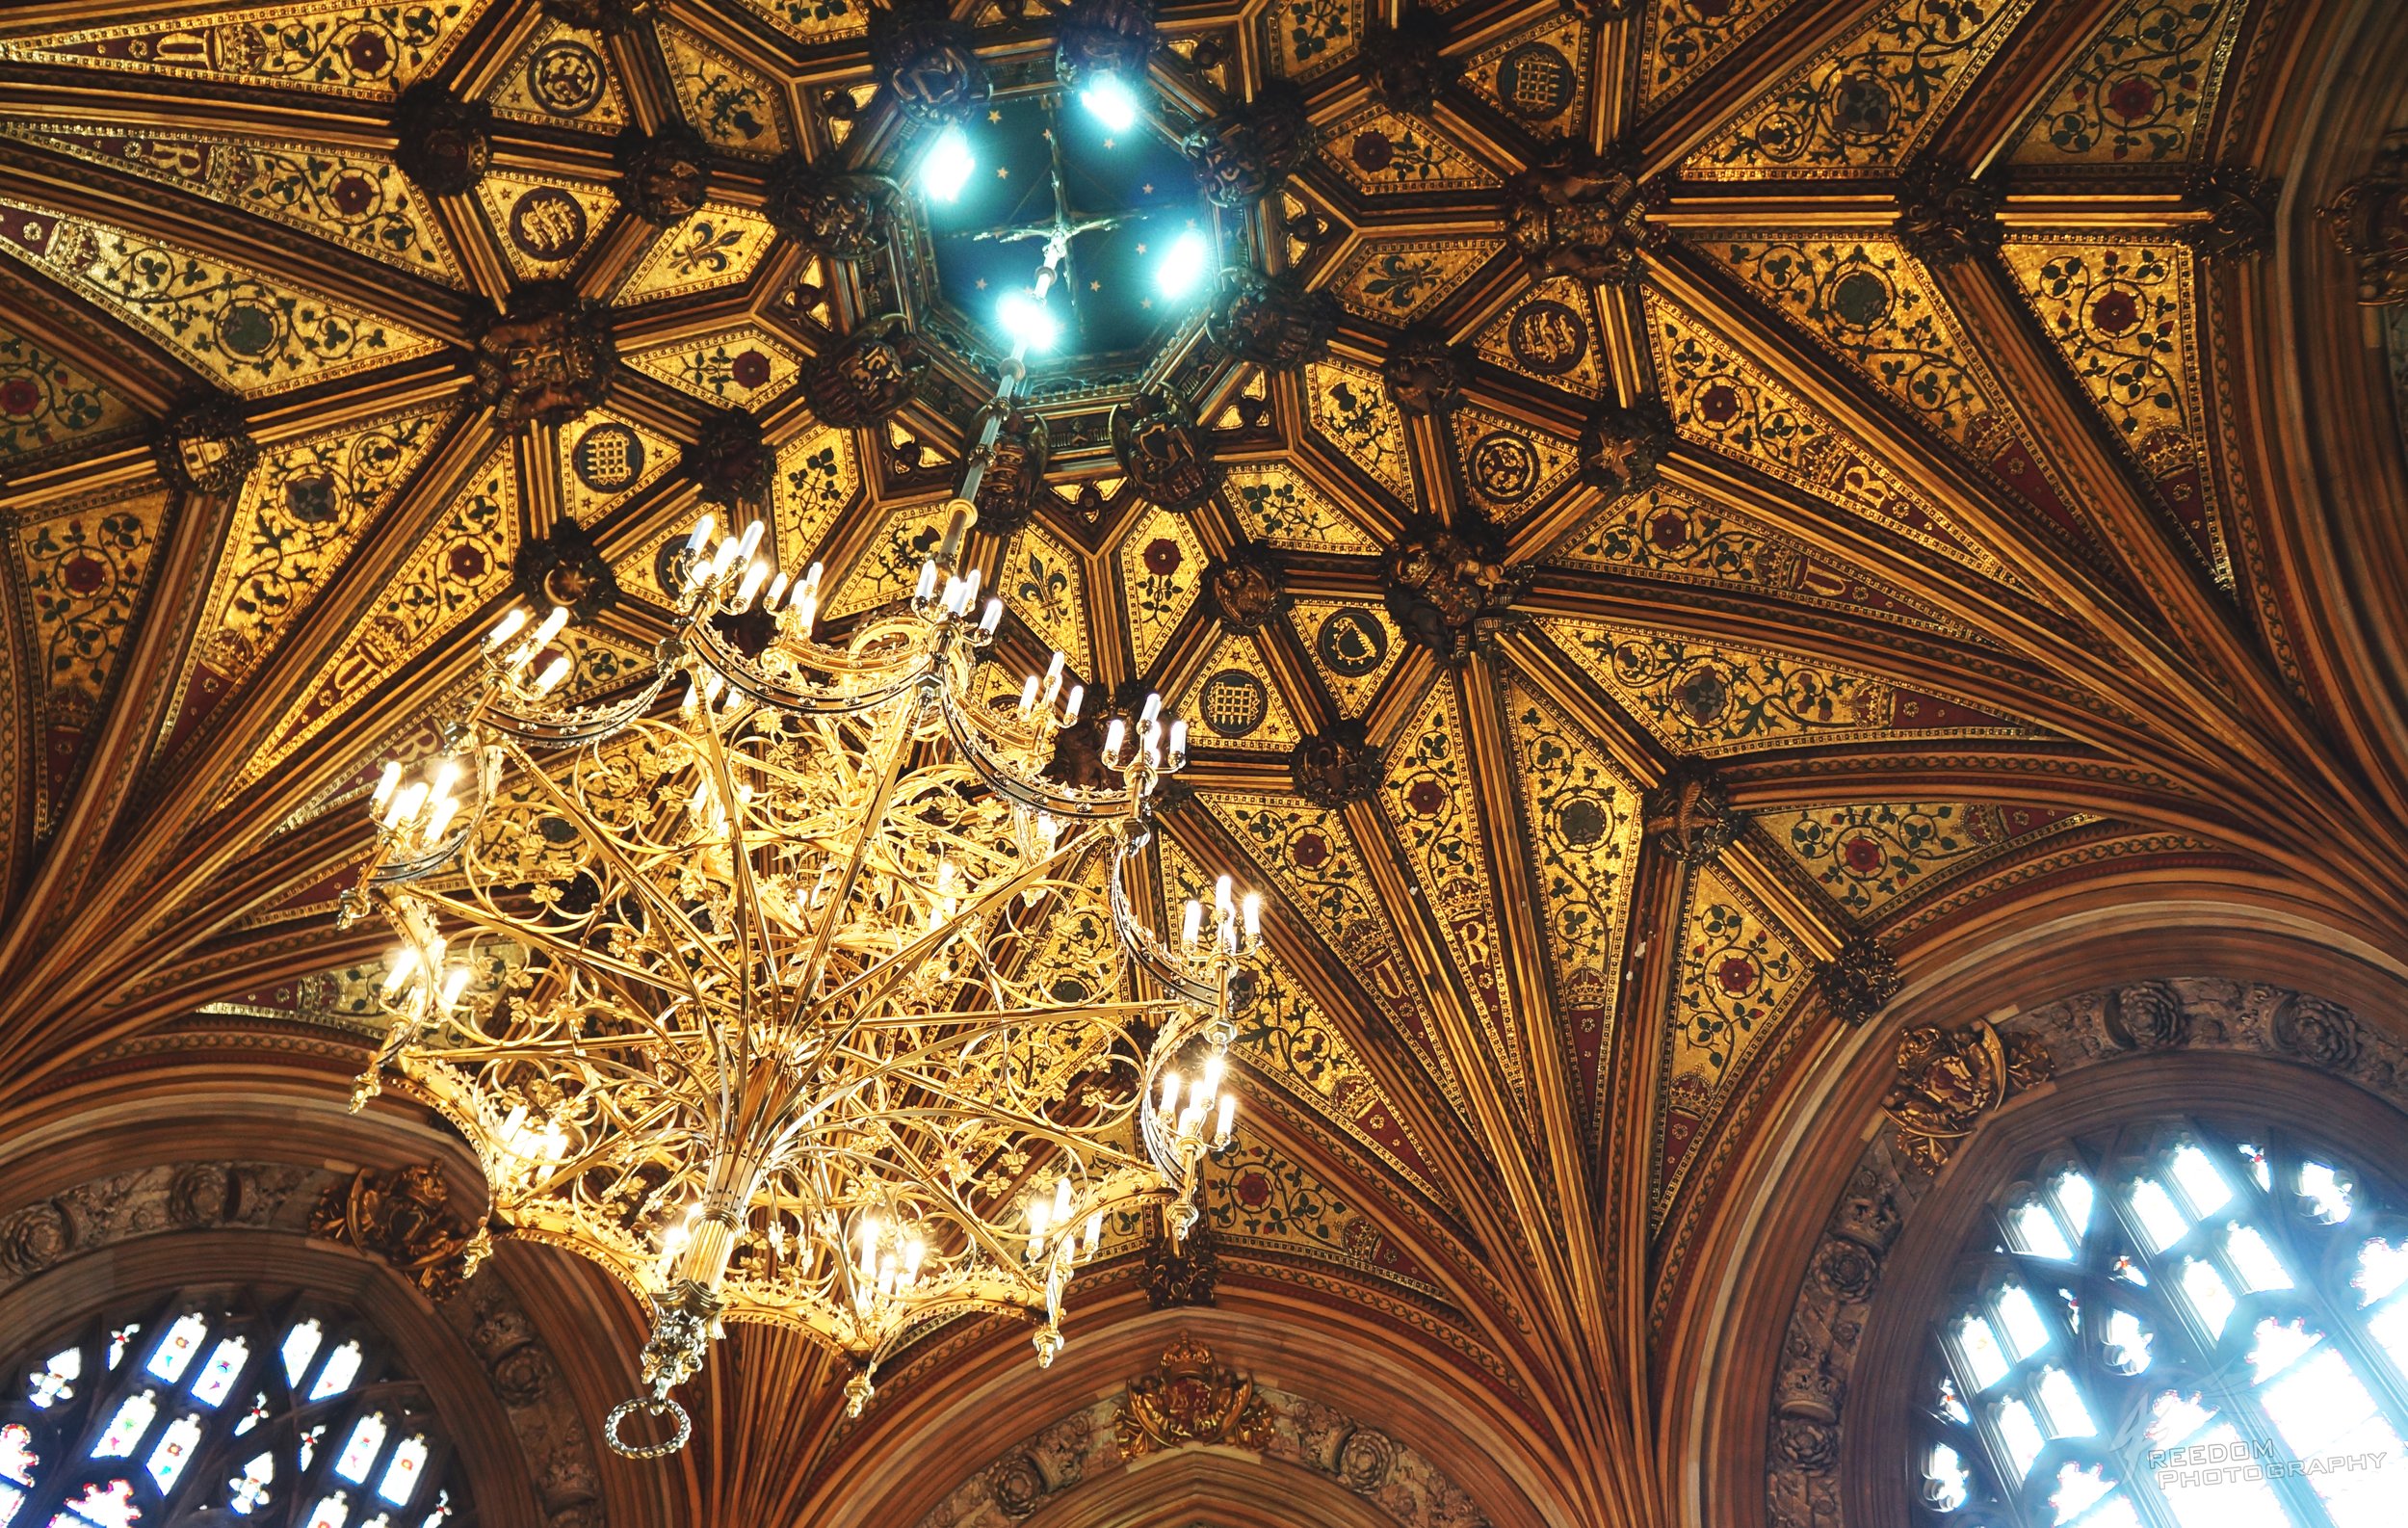 west-minister-uk-chandelier-golden-interior-roof-freeman-fung-photography-DSC01535_b_l.jpg